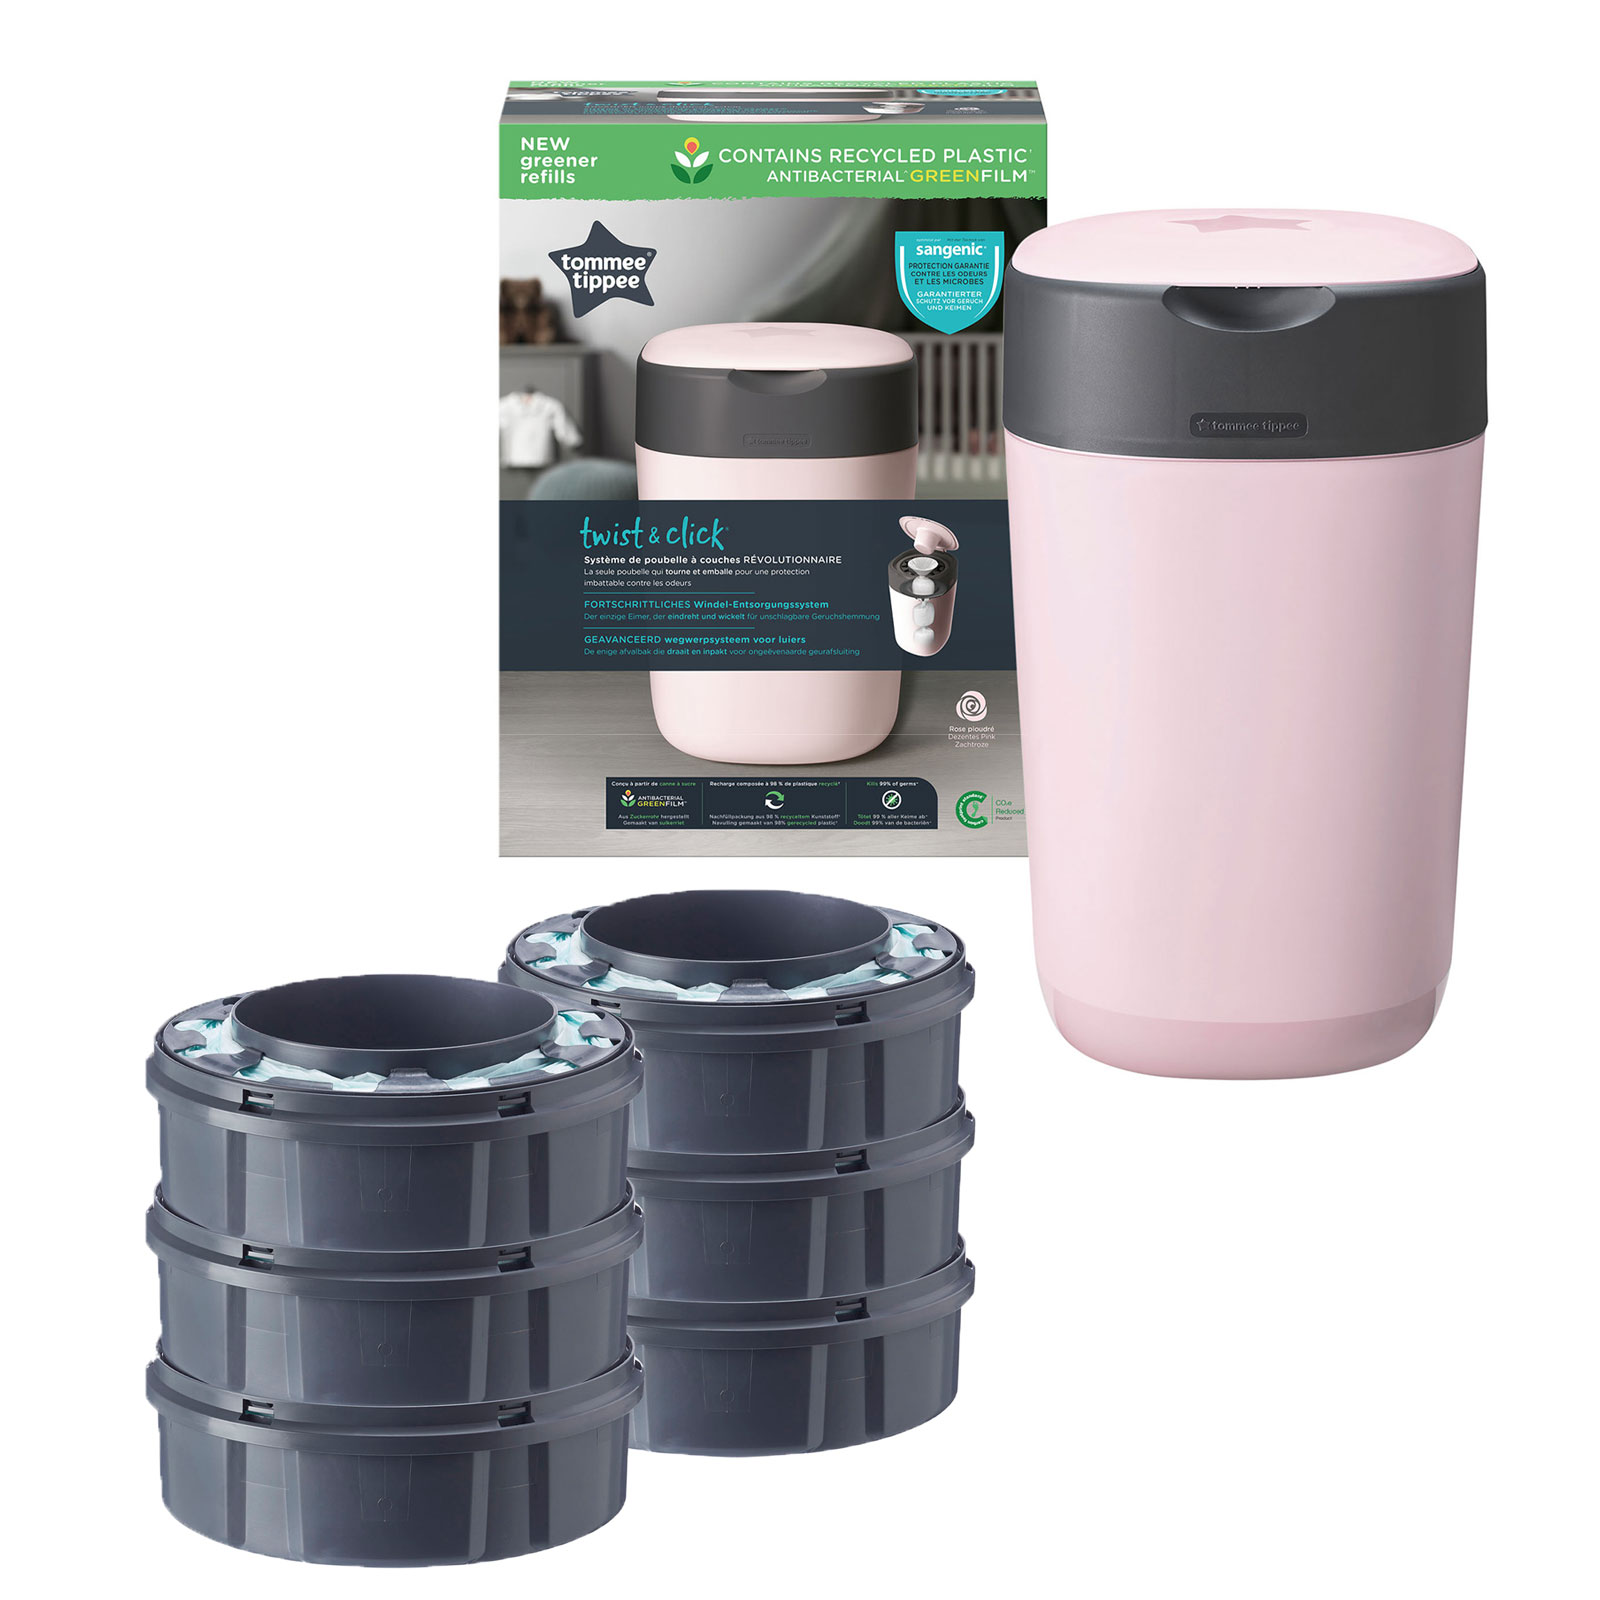 Tommee Tippee Twist & Click Nappy Disposal Bin & 6 Refills - Pink